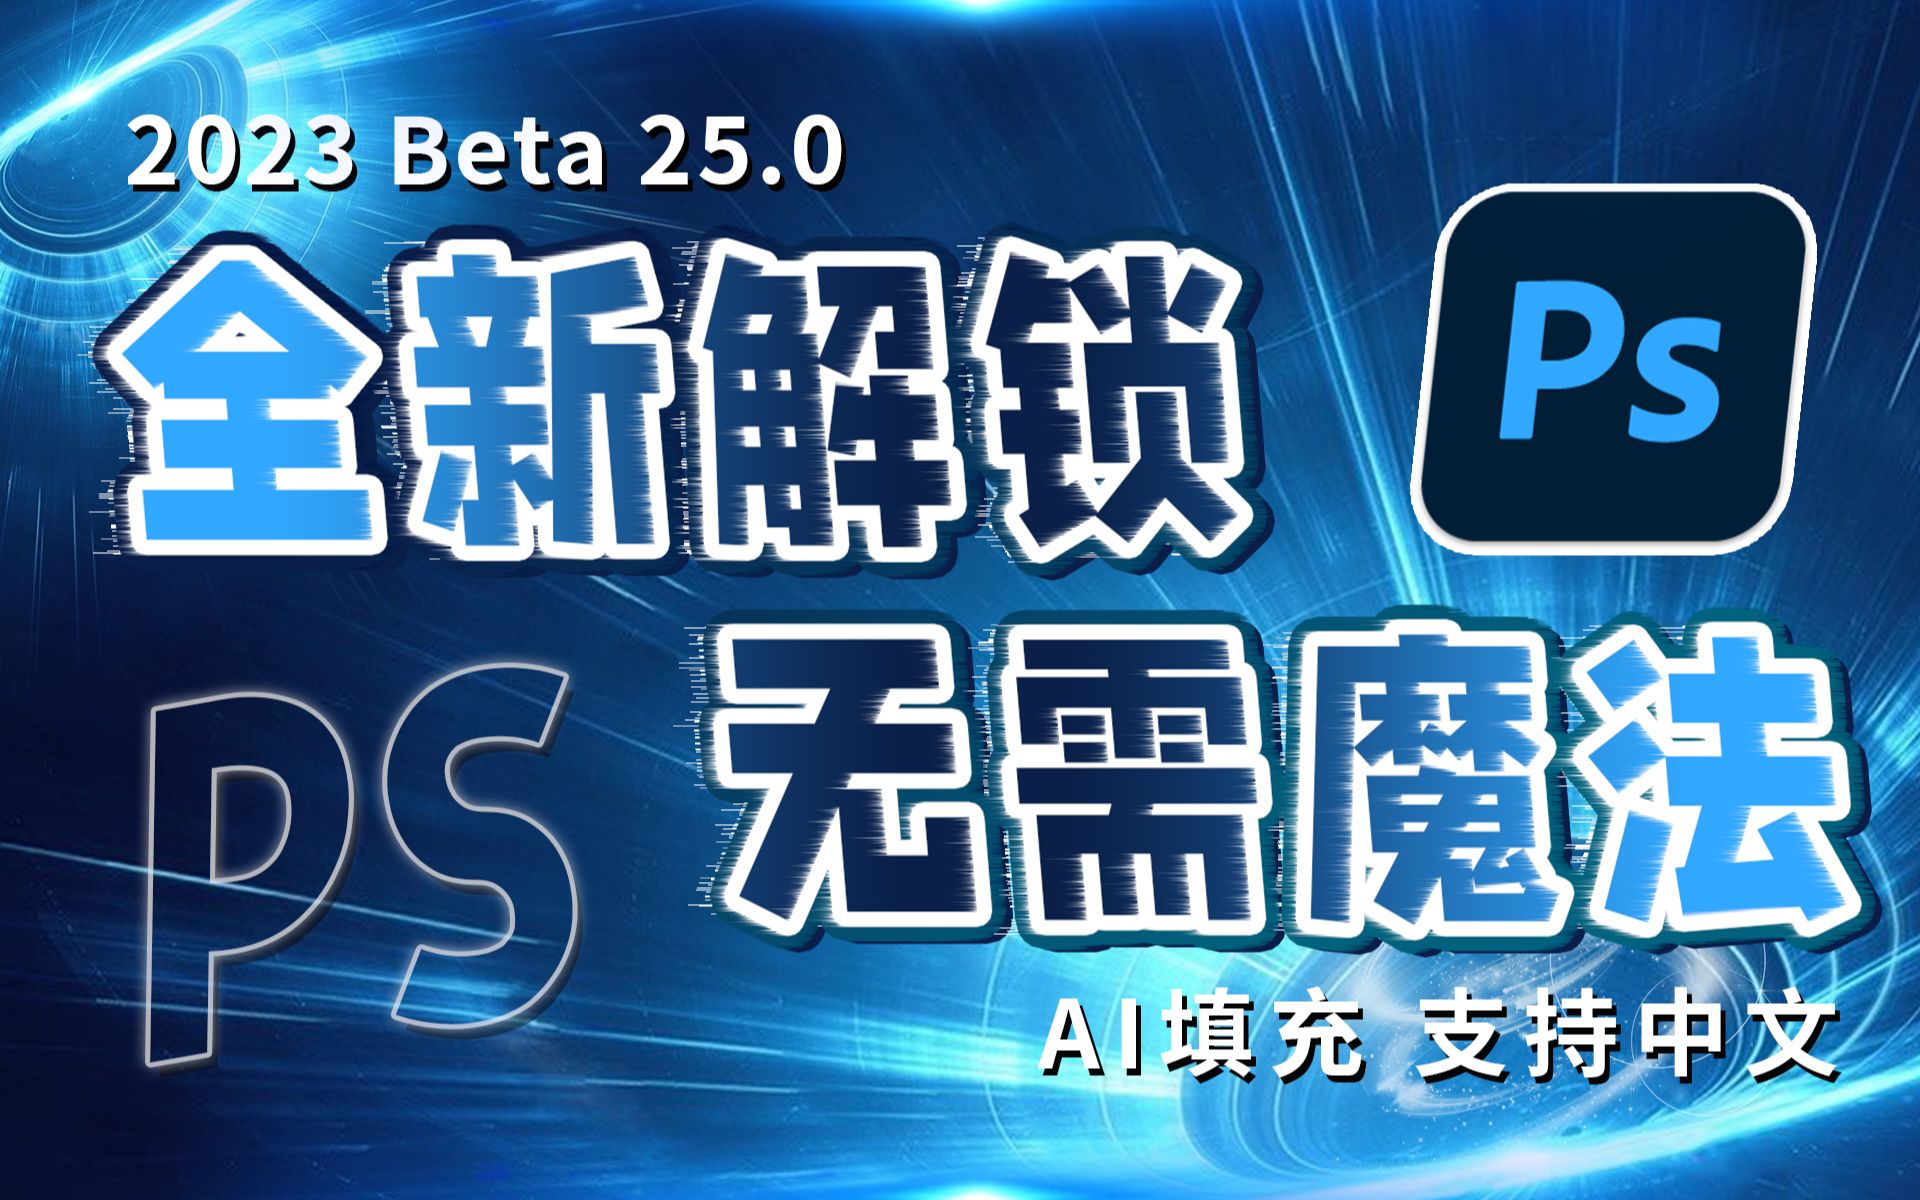 PS 2024即将发布，全新Beta 25.0解锁版！完美支持中文输入，无需魔法，支持使用神经滤镜